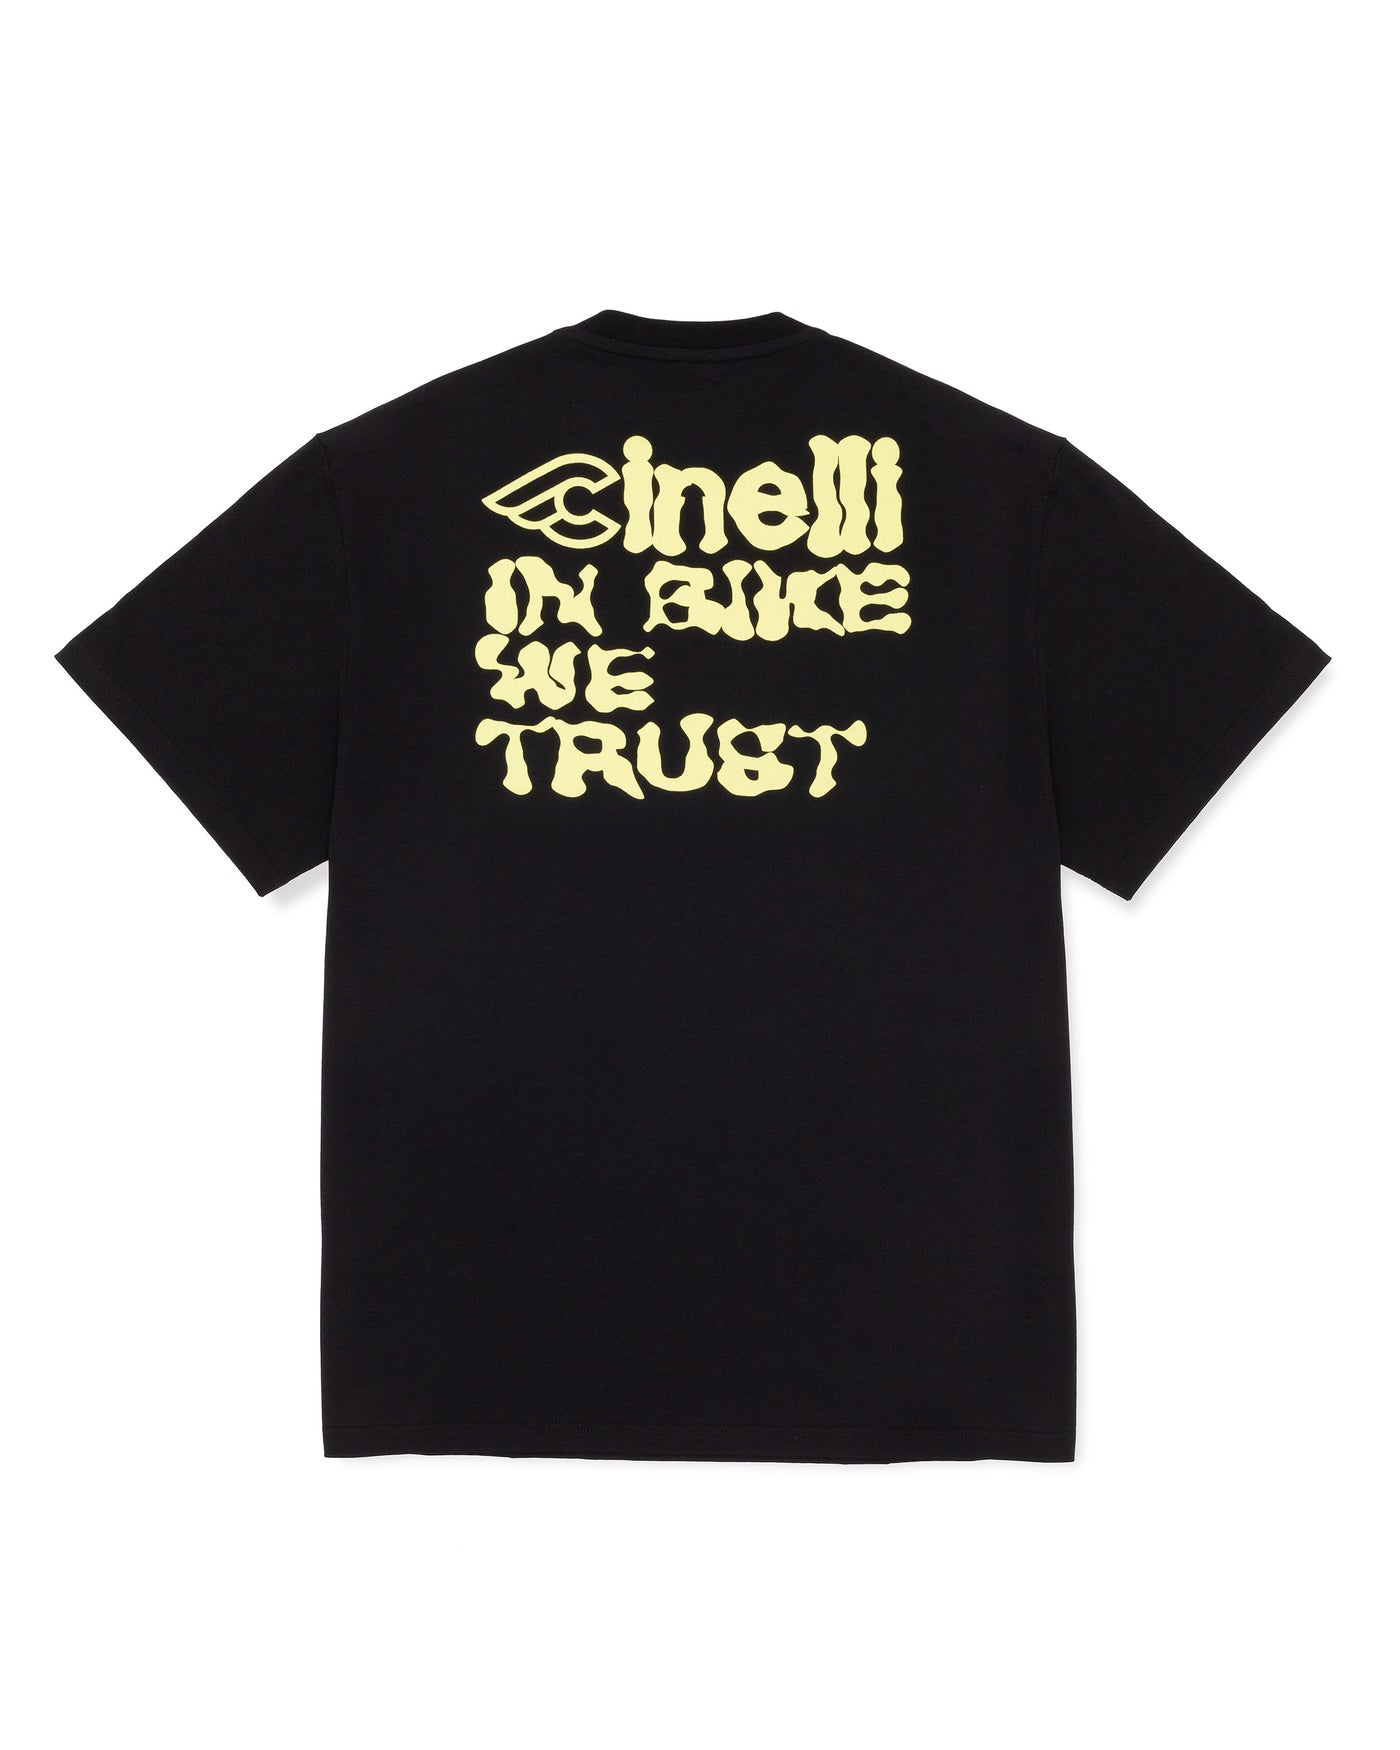 T-SHIRT IN-BIKE-WE-TRUST BLACK, T-Shirt, IMG.2